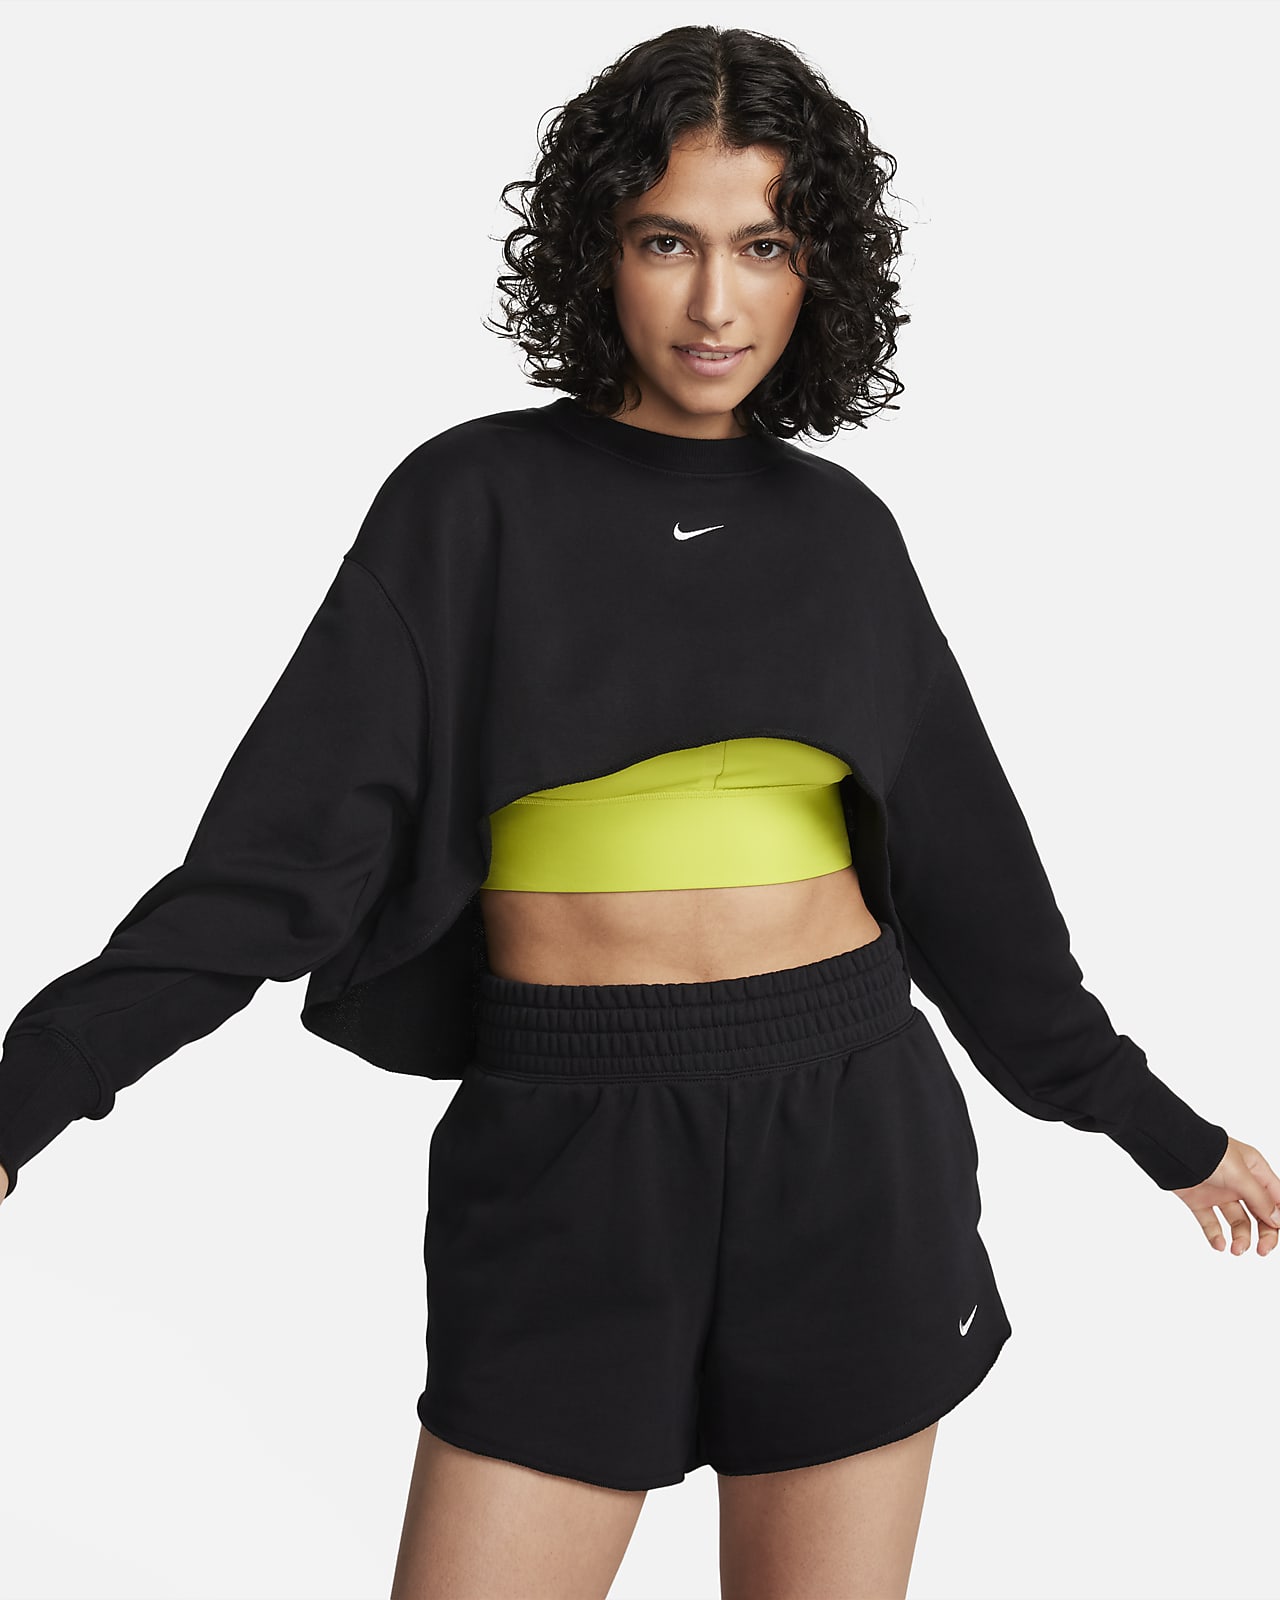 Arroyo Barra oblicua Malabares Nike Sportswear Women's French Terry Crewneck Crop Top. Nike.com